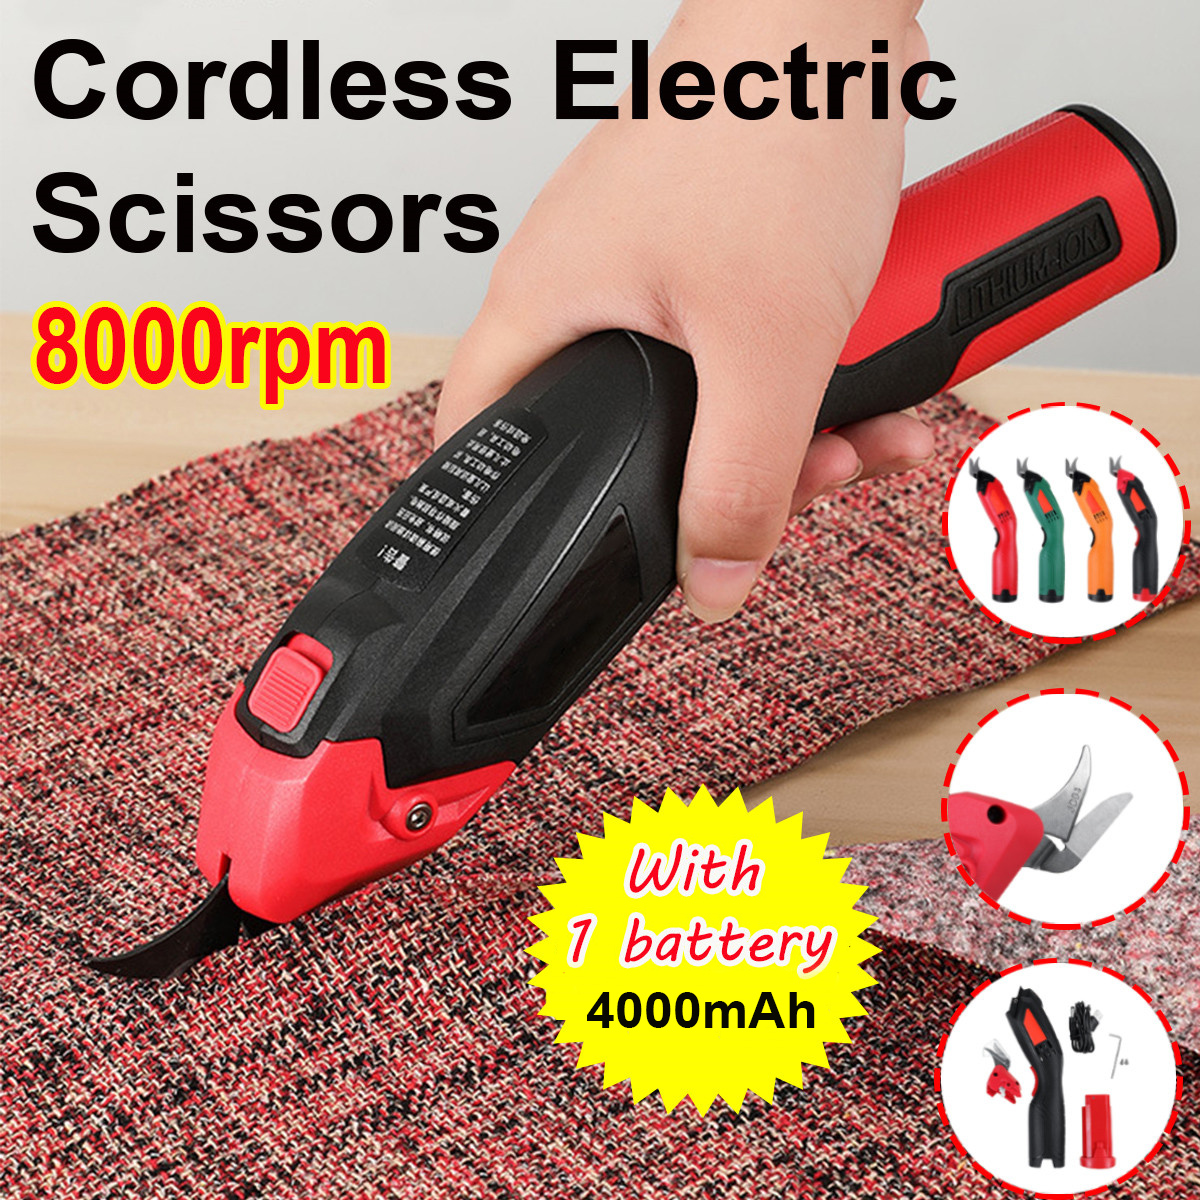 4000mAh-8000rmp-Electric-Cordless-Scissors-Portable-Rechargeable-Tailors-Cutter-W-1-Battery-1738322-1